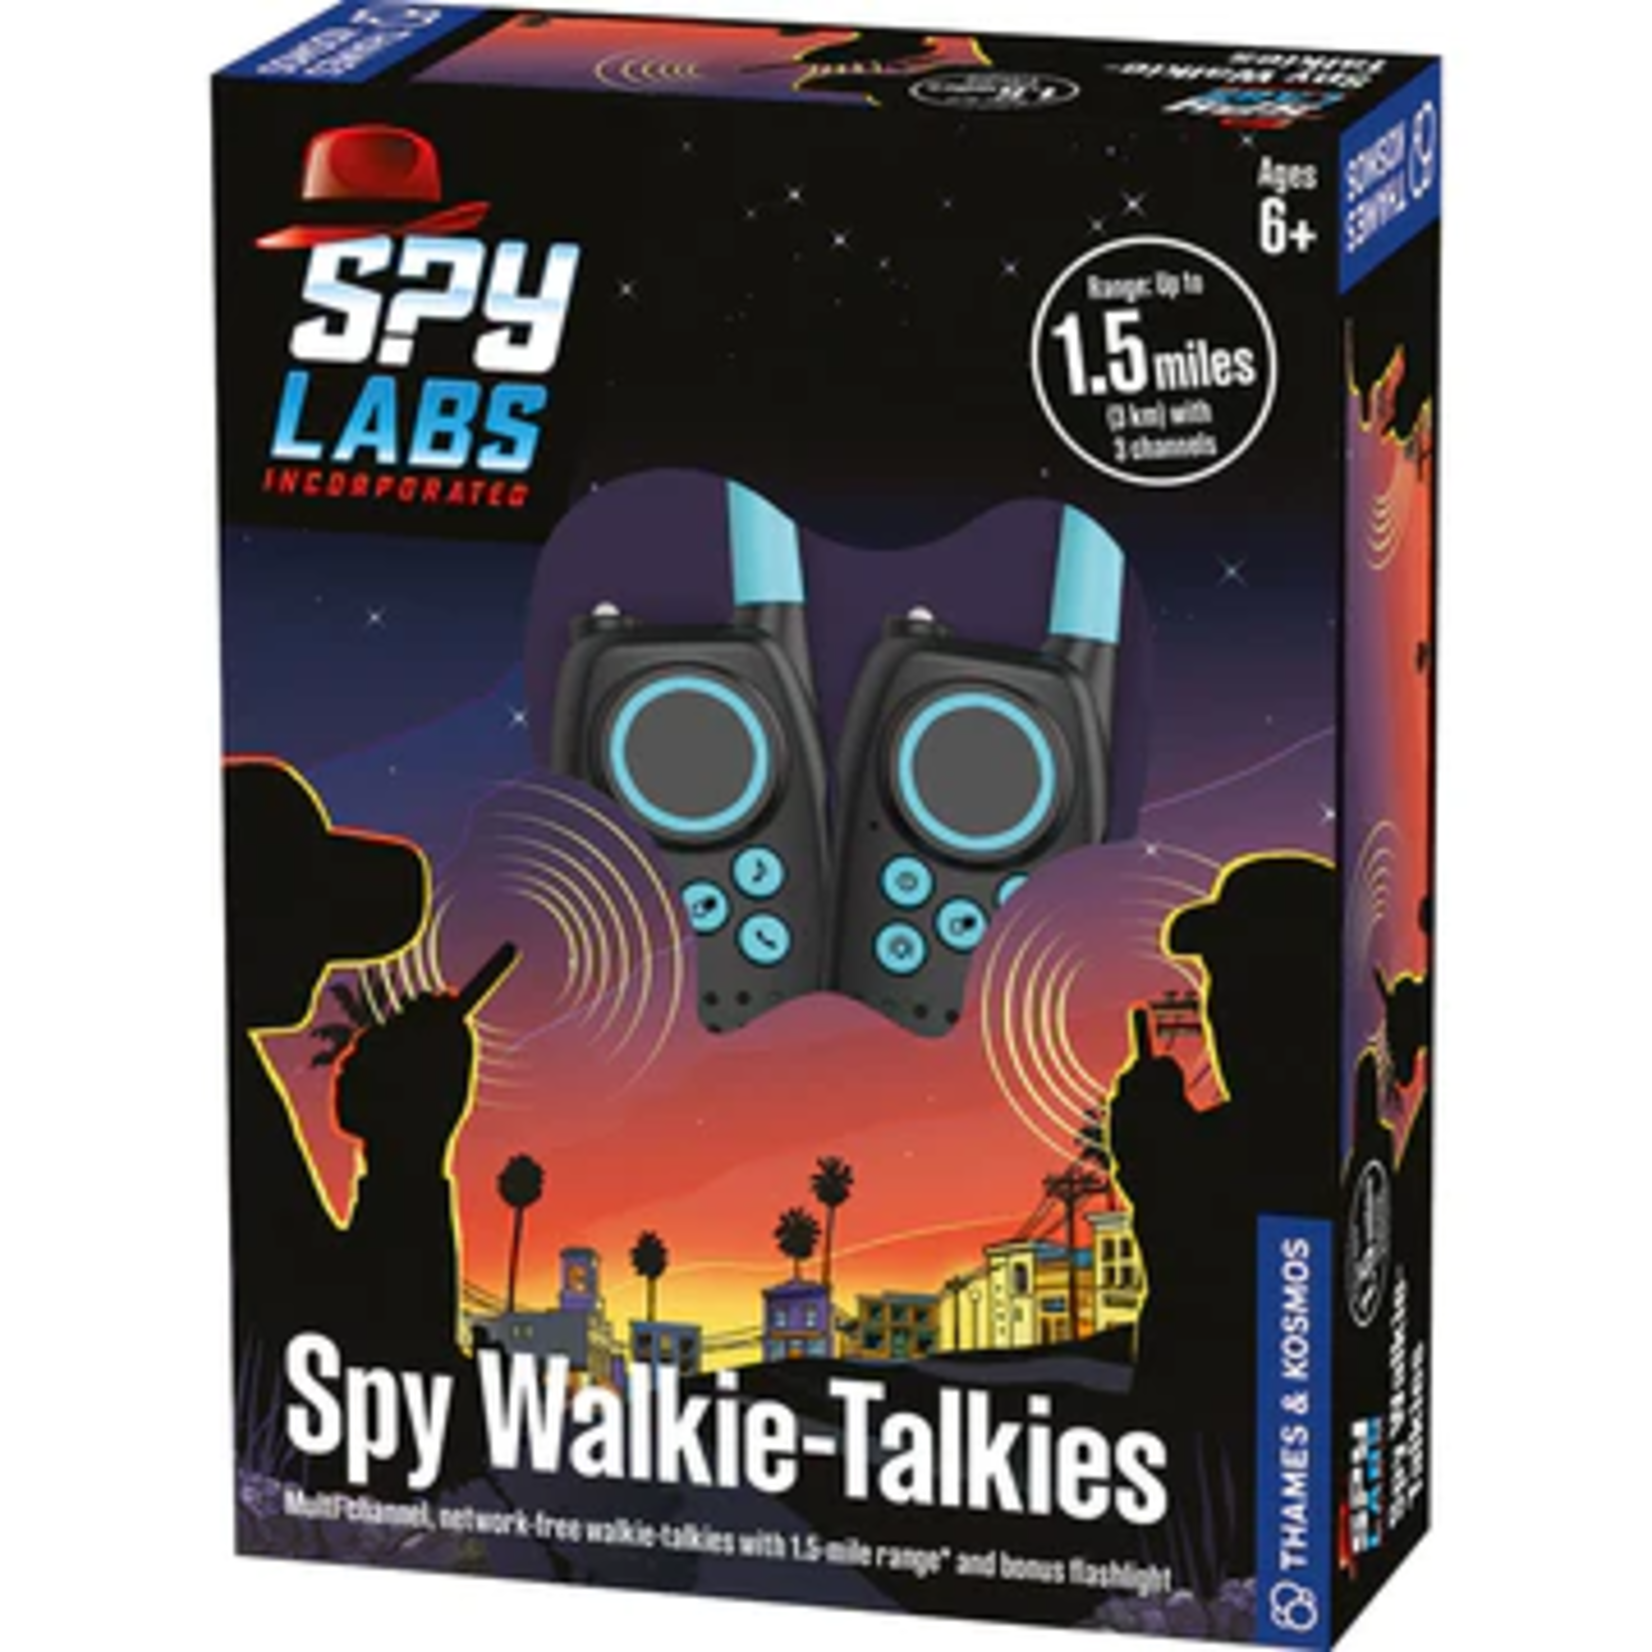 Spy Labs Spy Walkie-Talkies